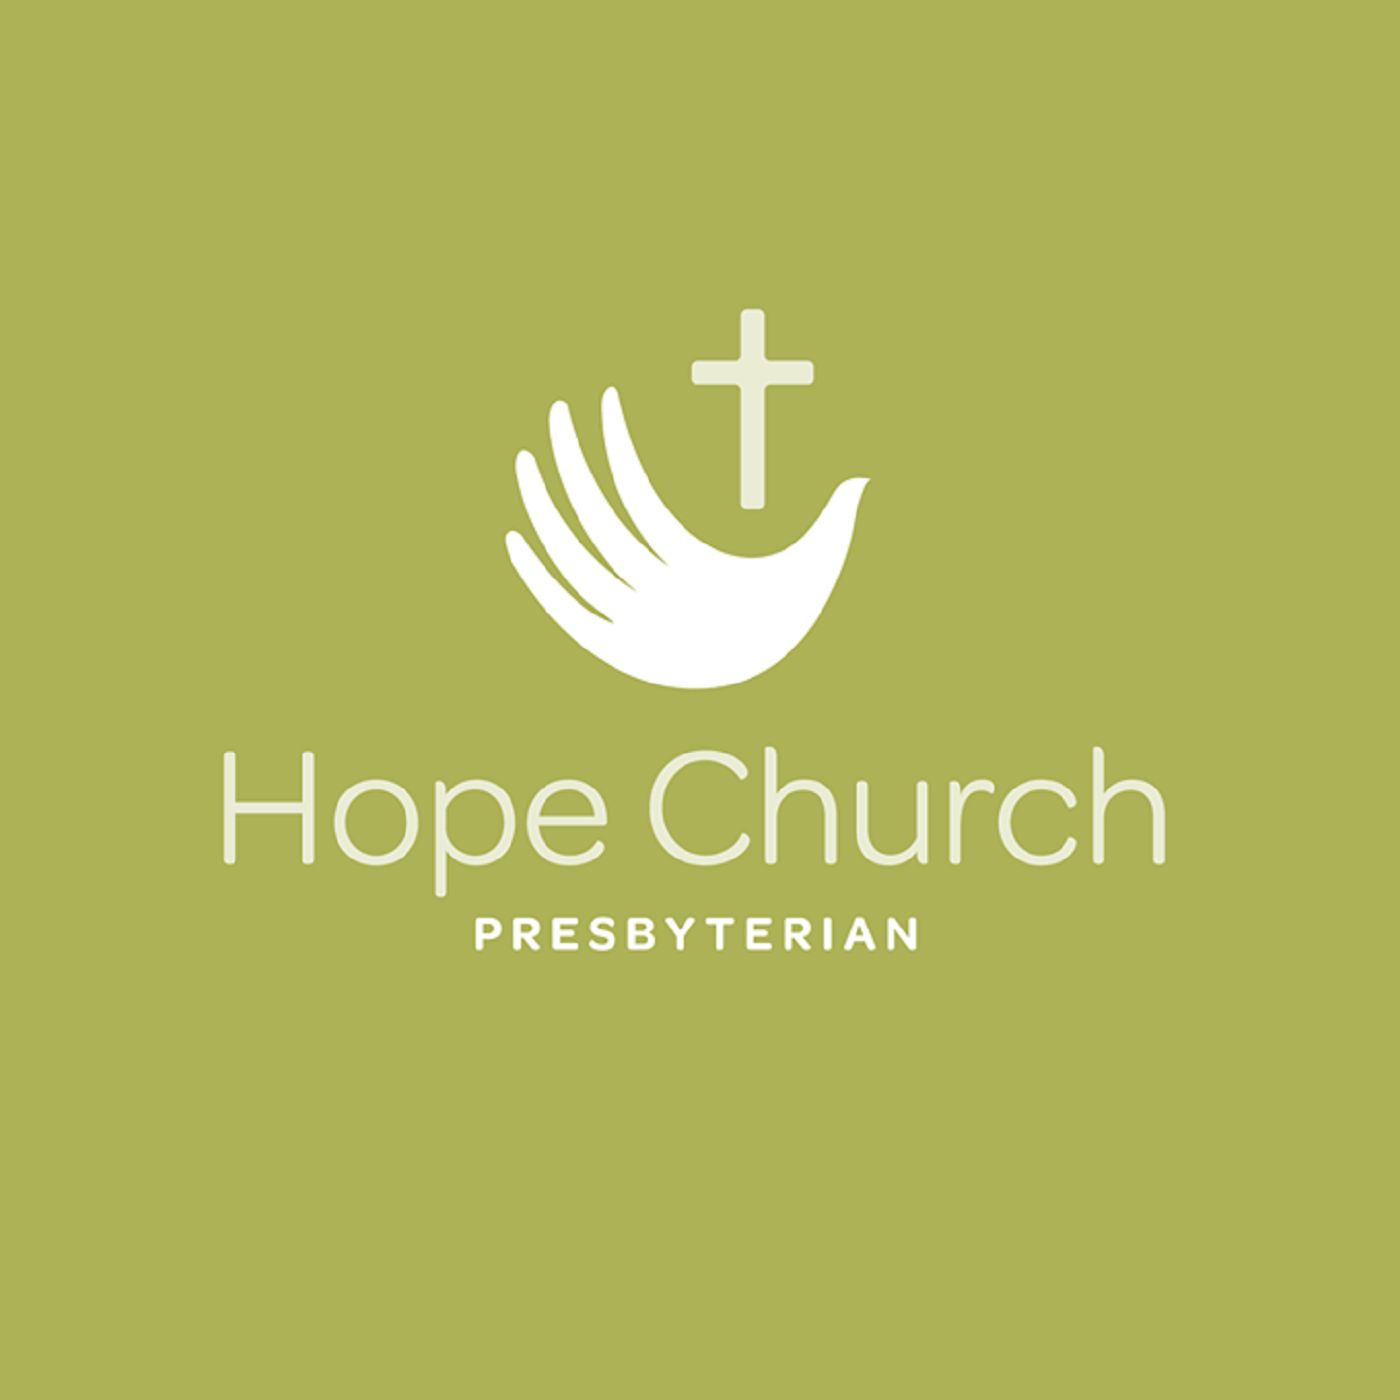 Hope Church-Presbyterian